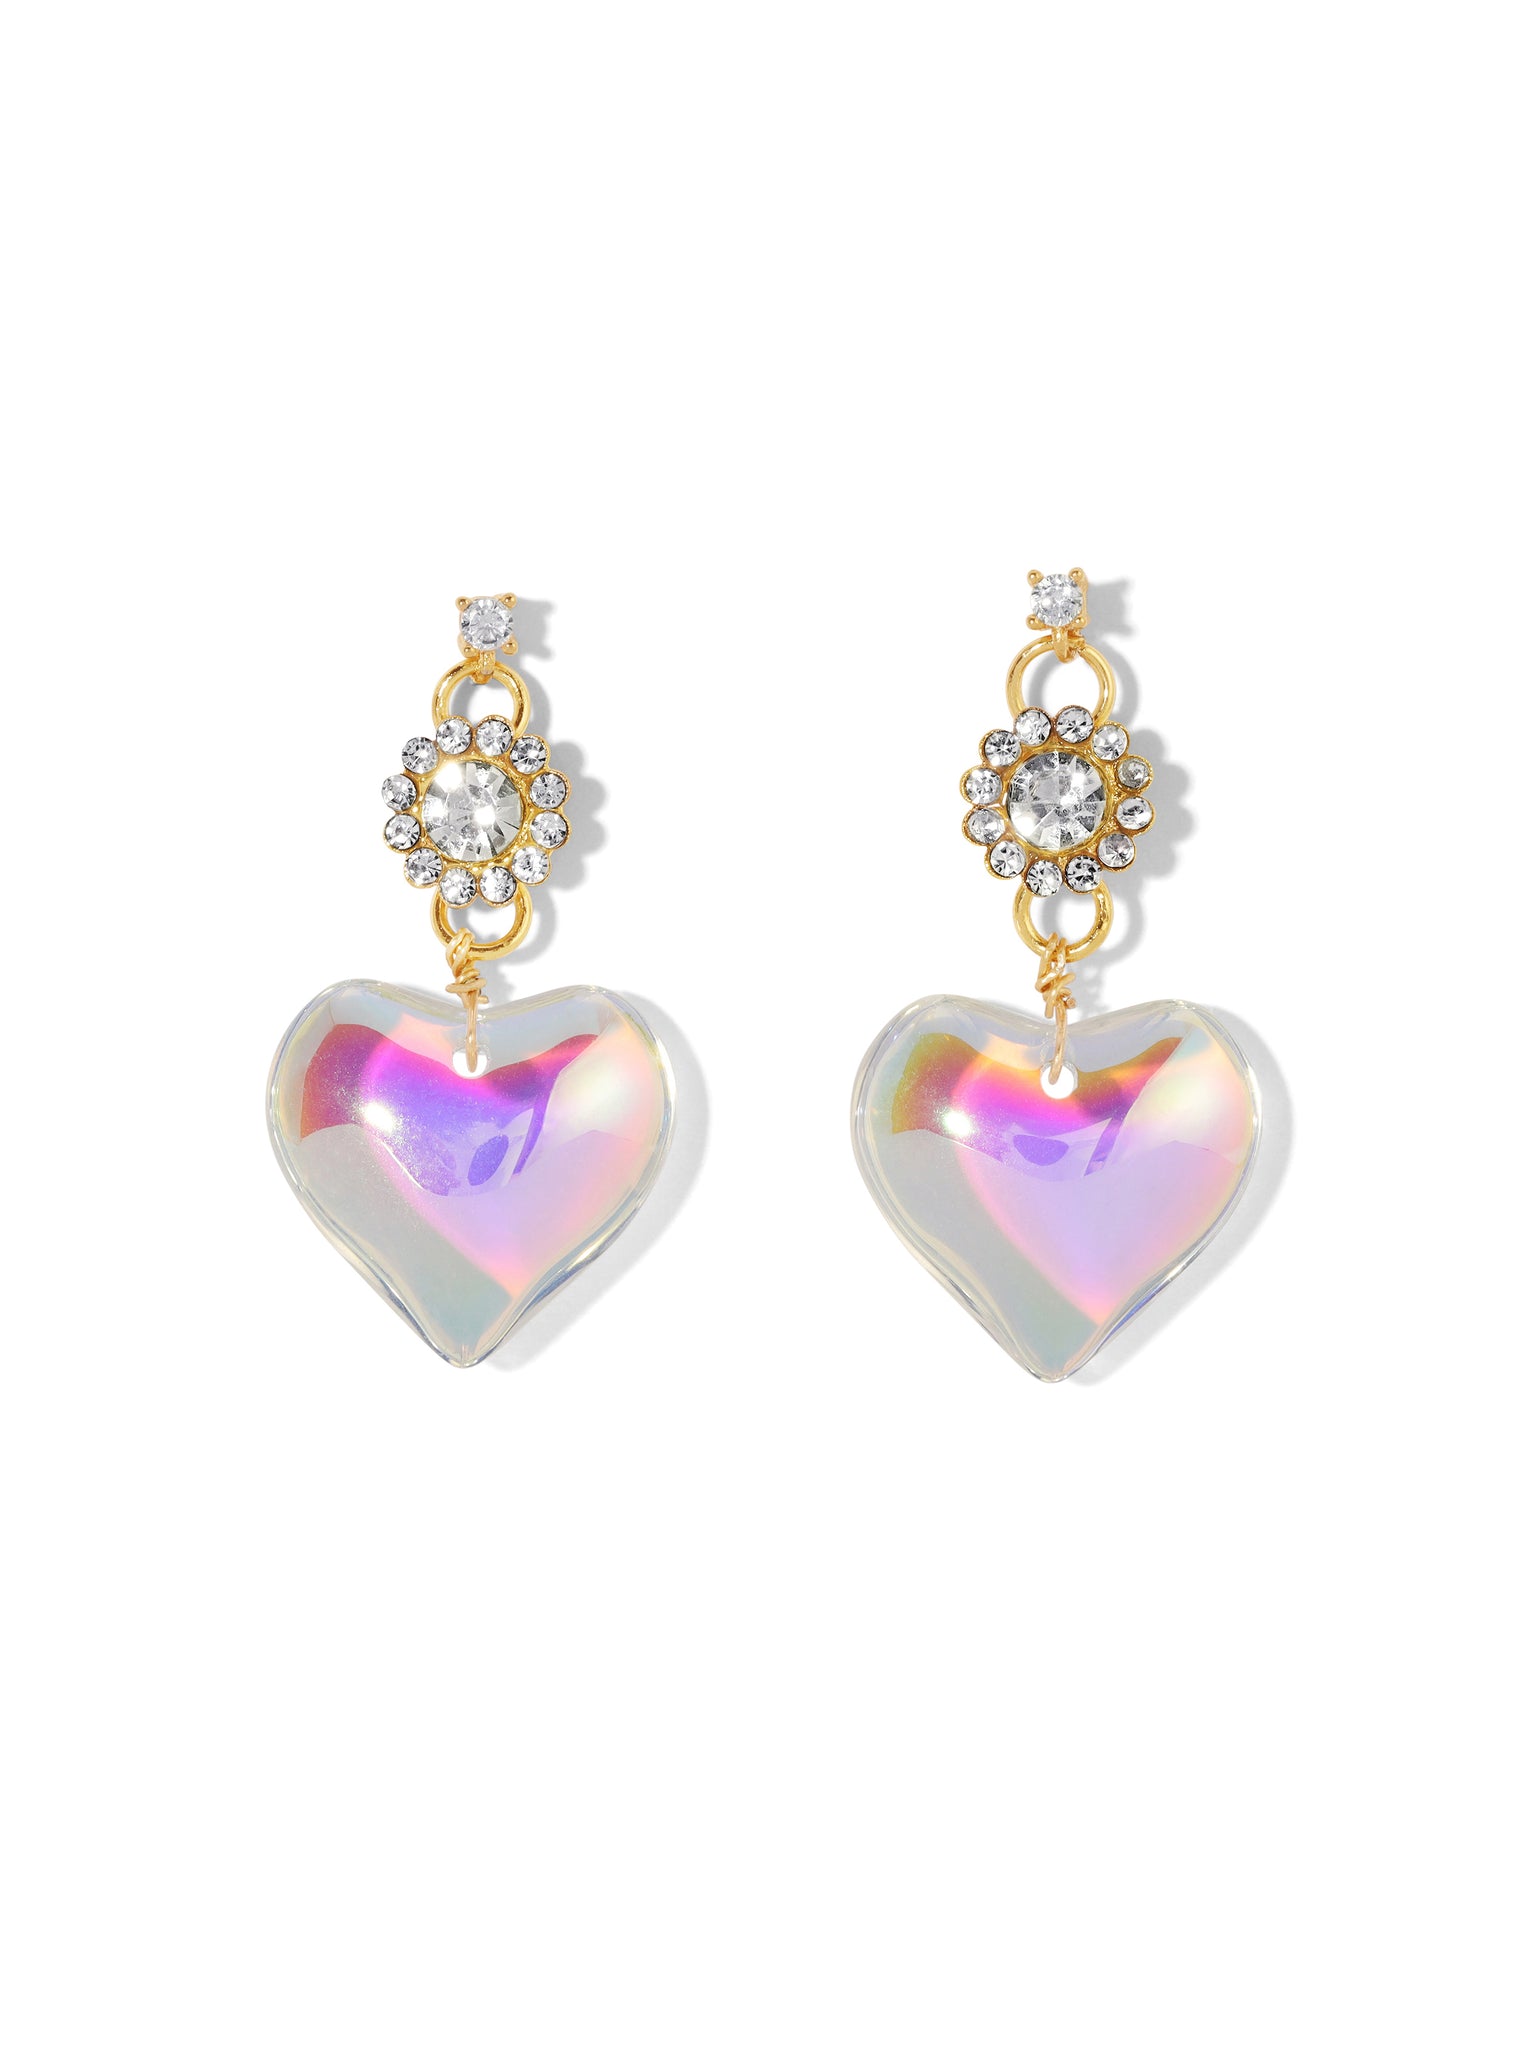 The Rebecca Heart Earrings